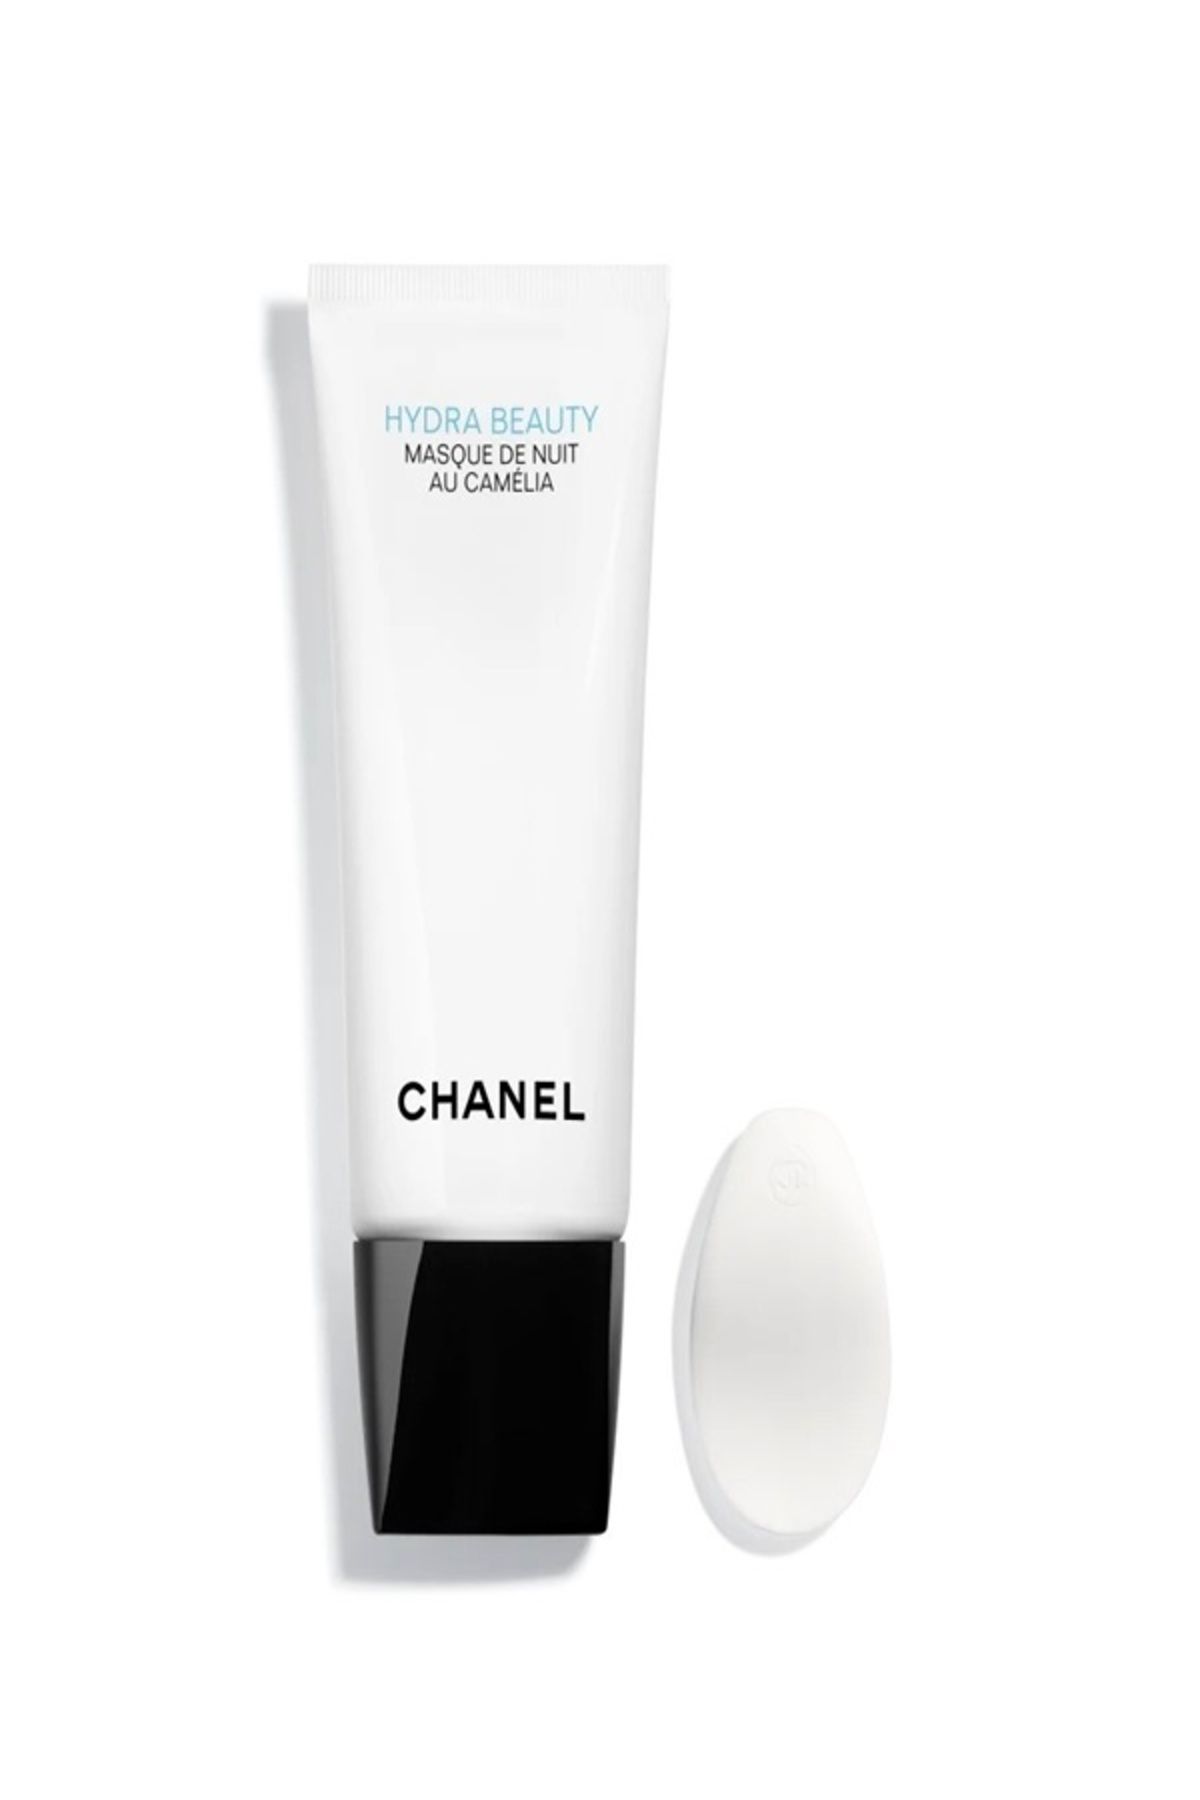 Chanel ماسک شبانه عصاره کاملیا HYDRA BEAUTY آبرسانی عمیق و اکسیژن رسانی ضد پیری 100میل